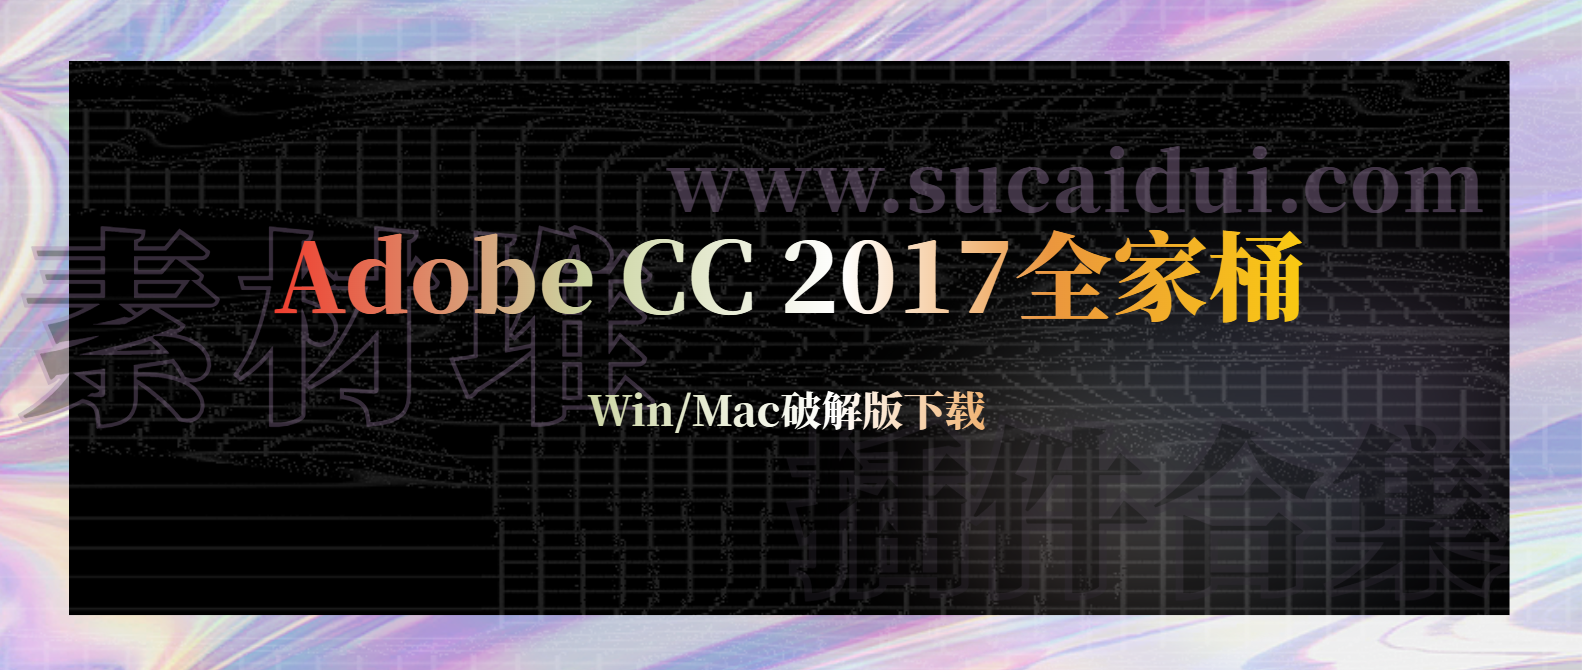 Adobe CC 2017全家桶大师版 Win/Mac-1